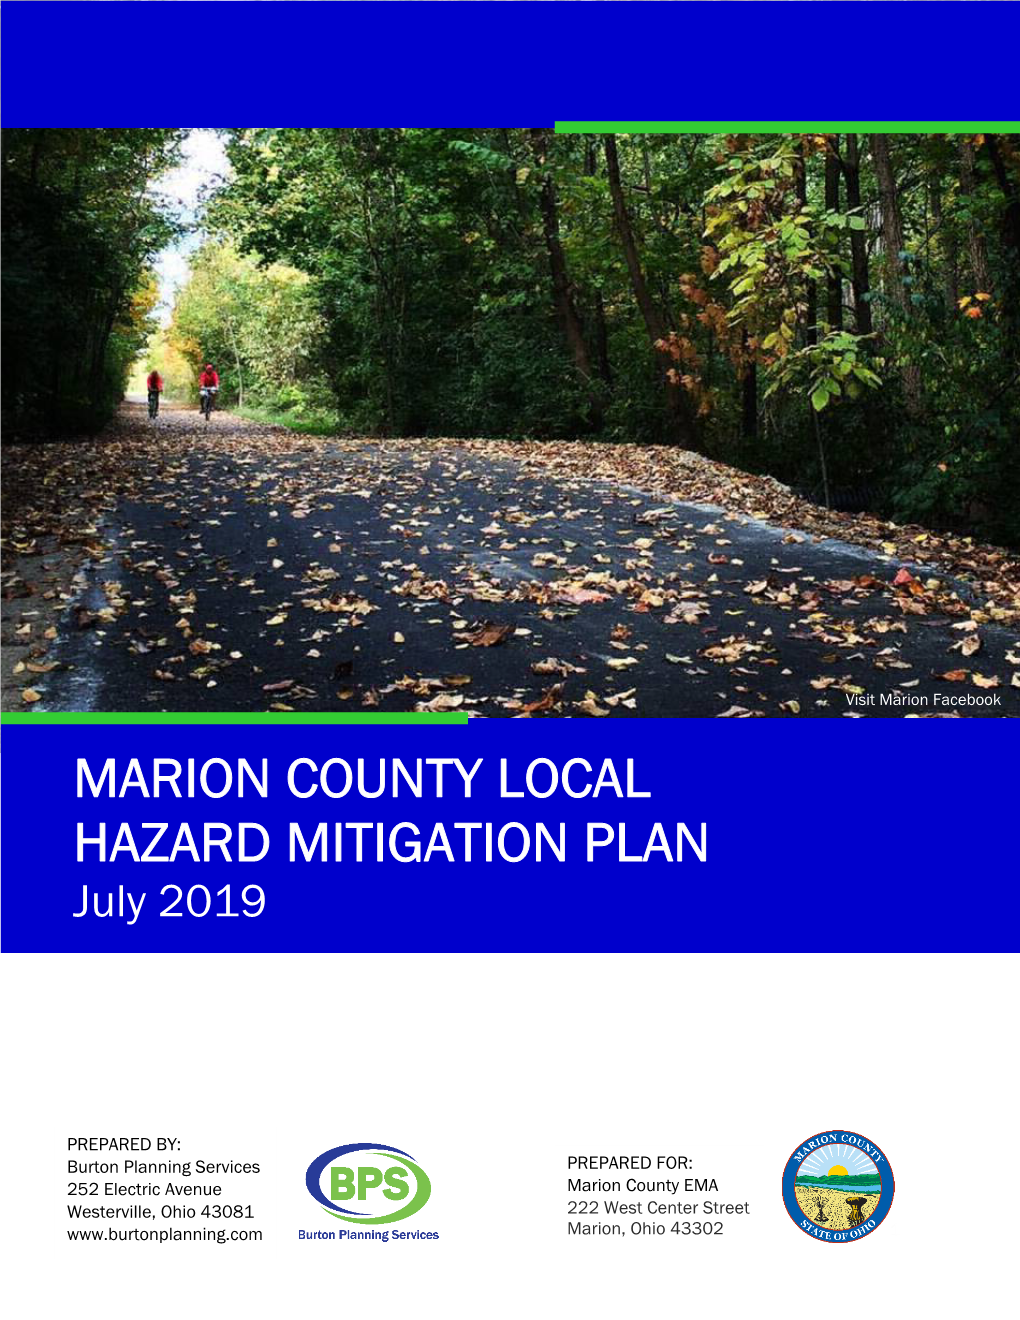 MARION COUNTY LOCAL HAZARD MITIGATION PLAN July 2019